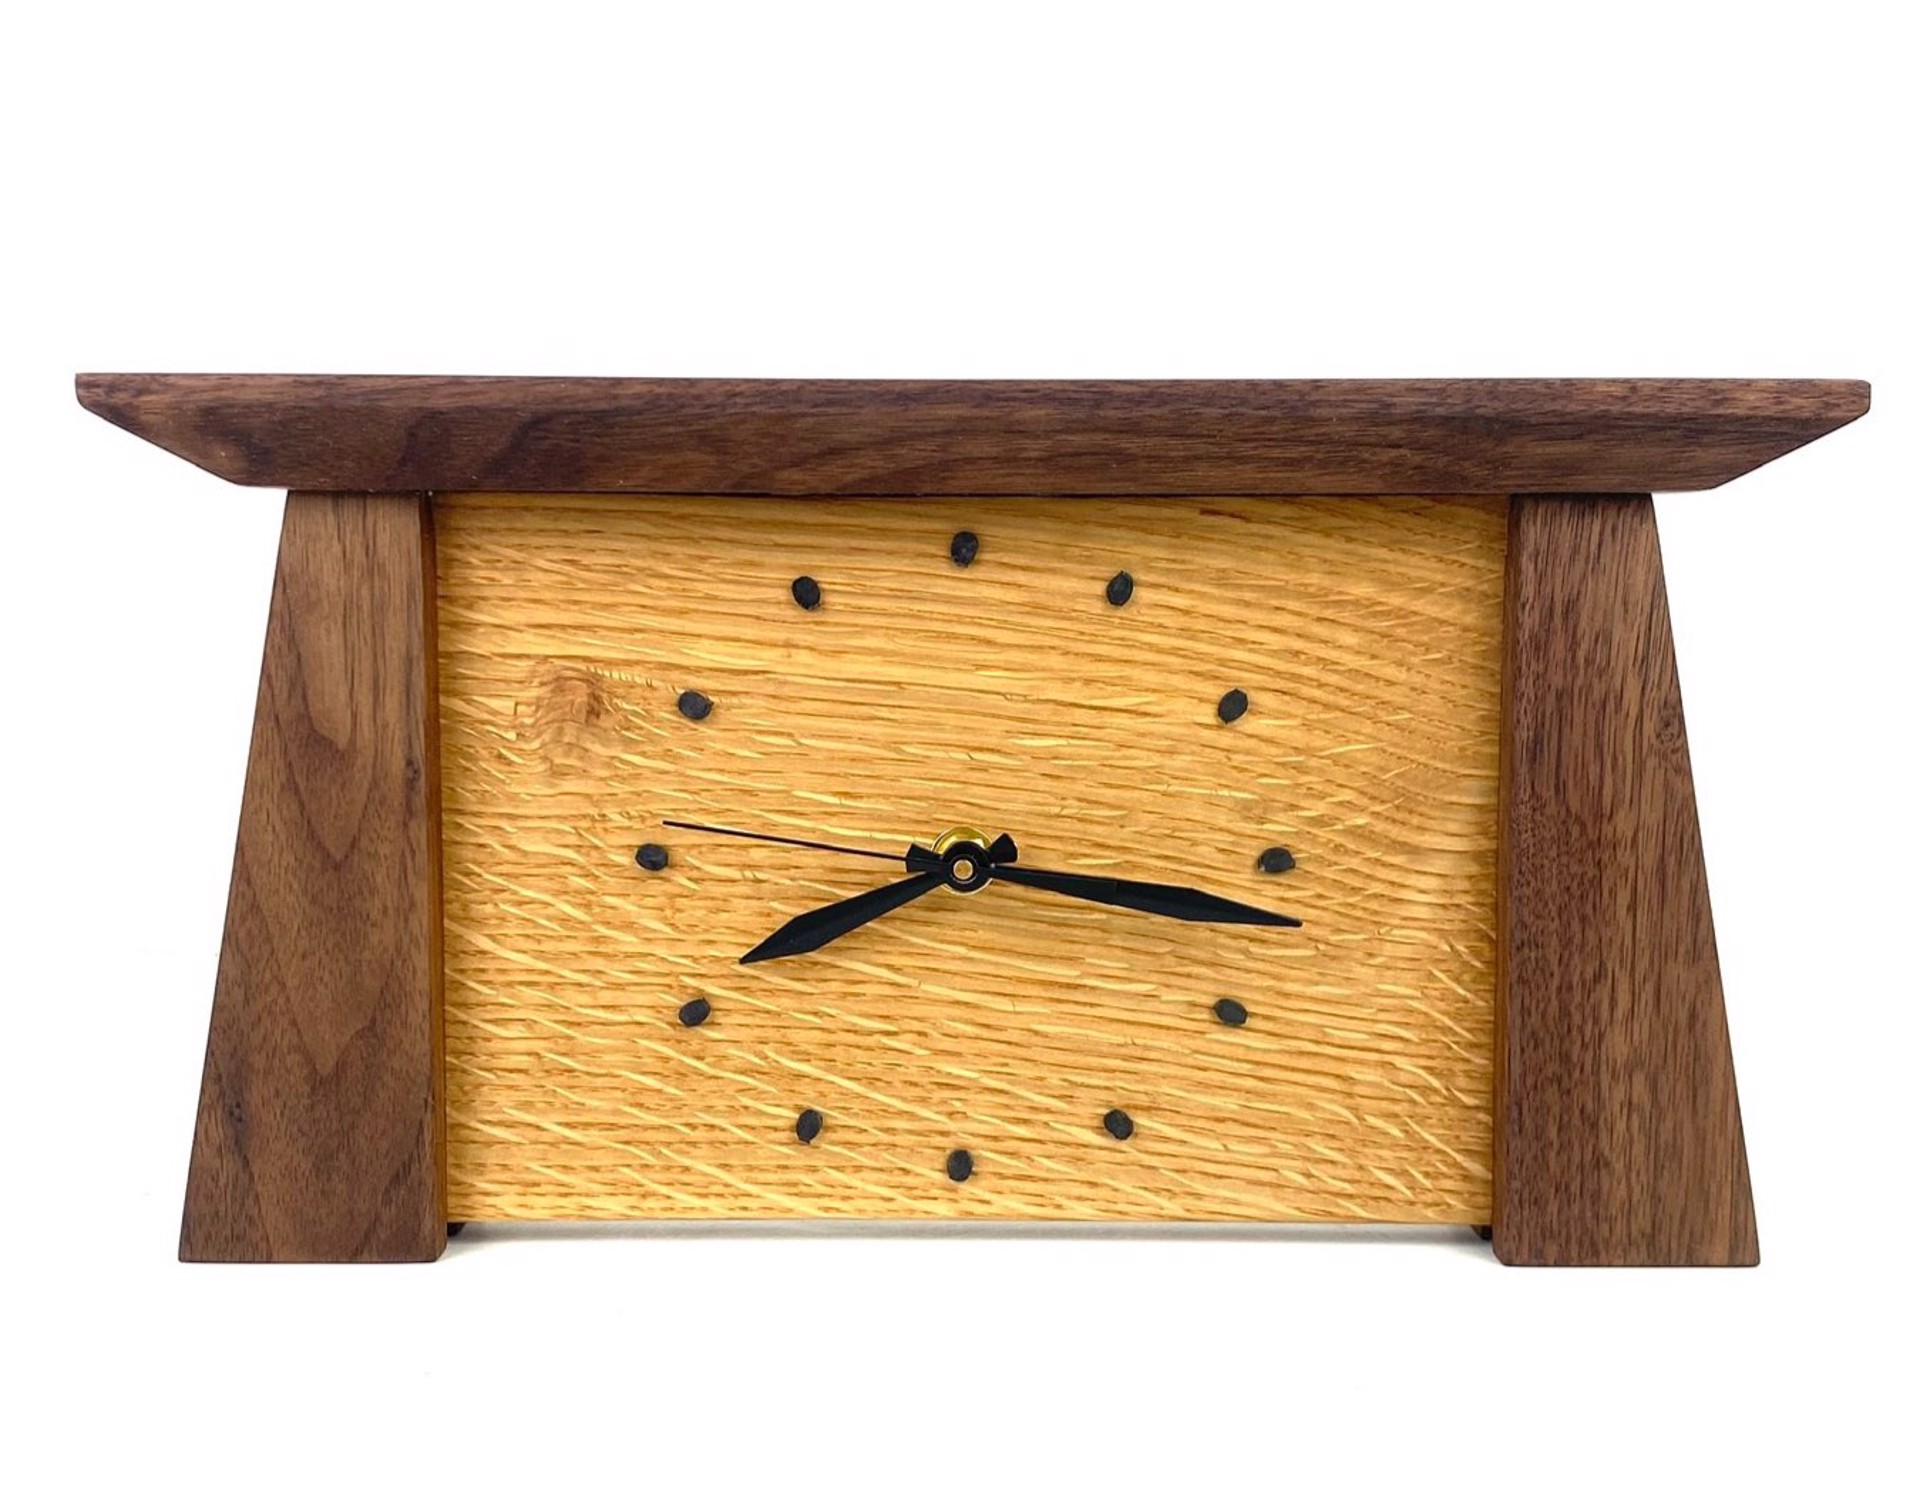 Prairie Mantel Clock in Walnut and Oak by Sabbath Day Woods